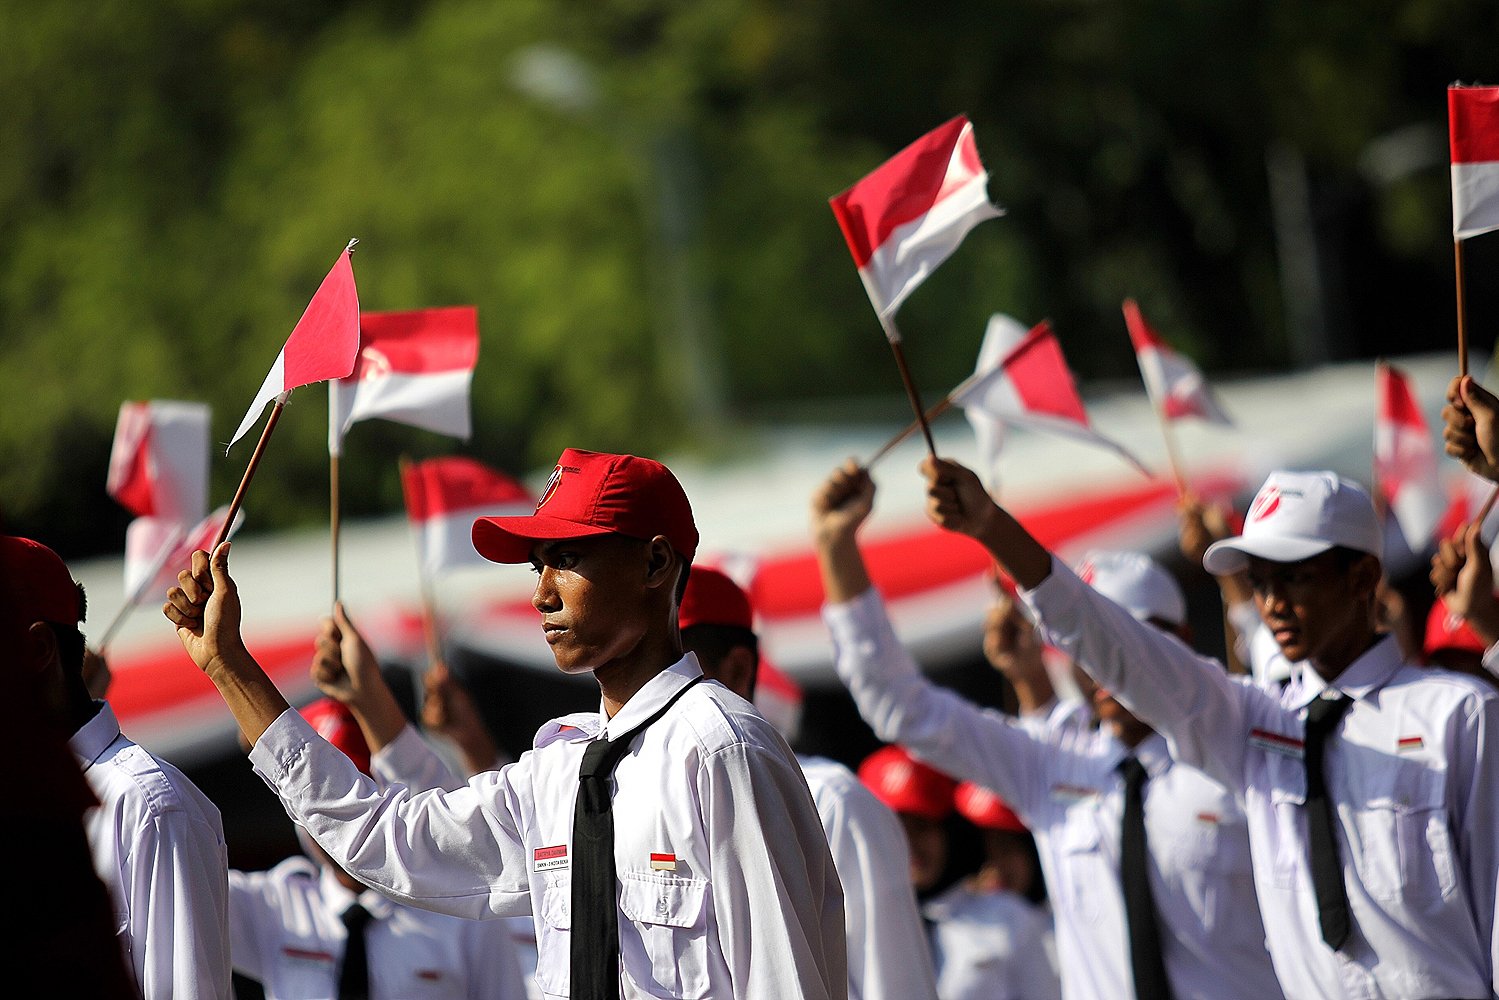 Presiden Joko Widodo juga mengundang siswa TK dan SD ke Istana dari penjuru Indonesia, mulai dari Jakarta, Bengkulu, Jawa Timur, Papua Barat, Banten dan lain-lain.